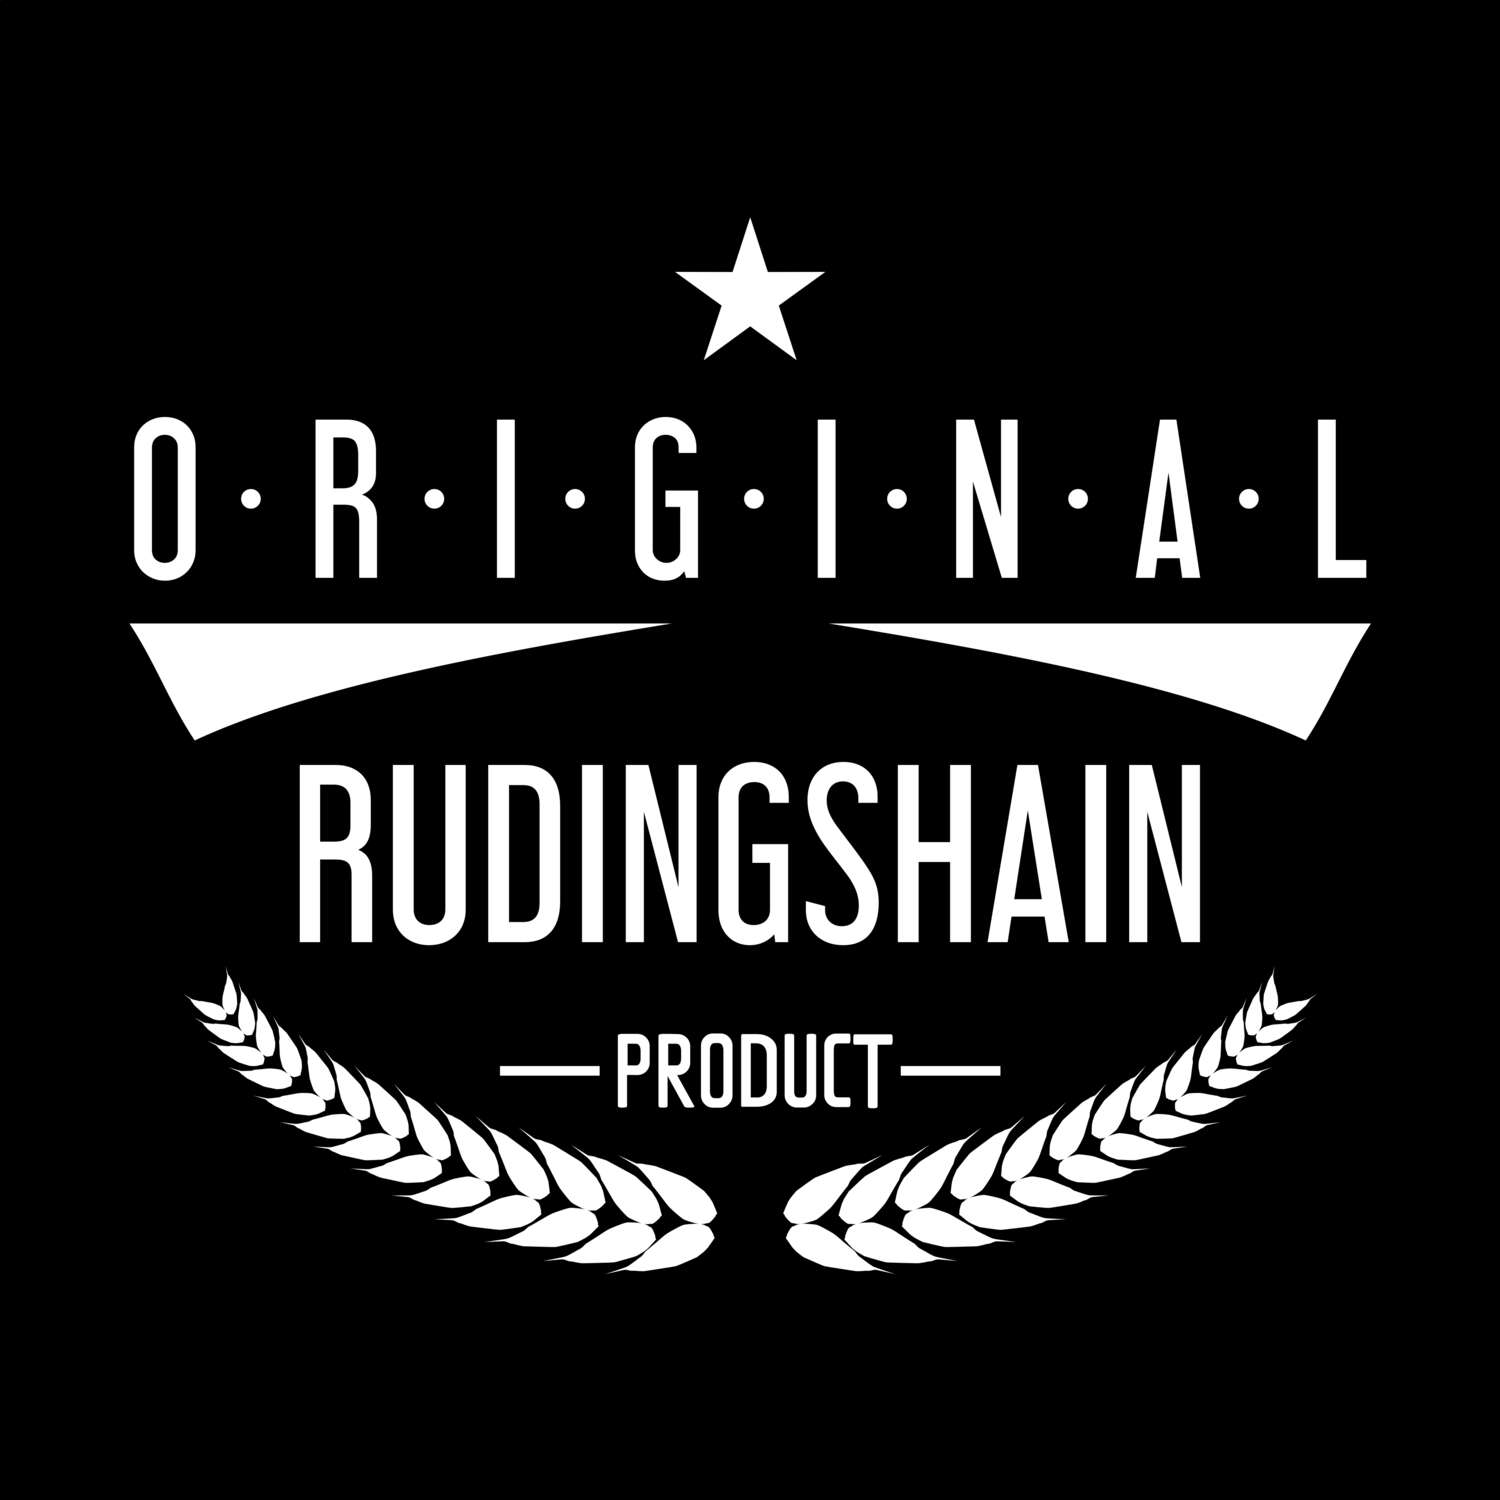 Rudingshain T-Shirt »Original Product«